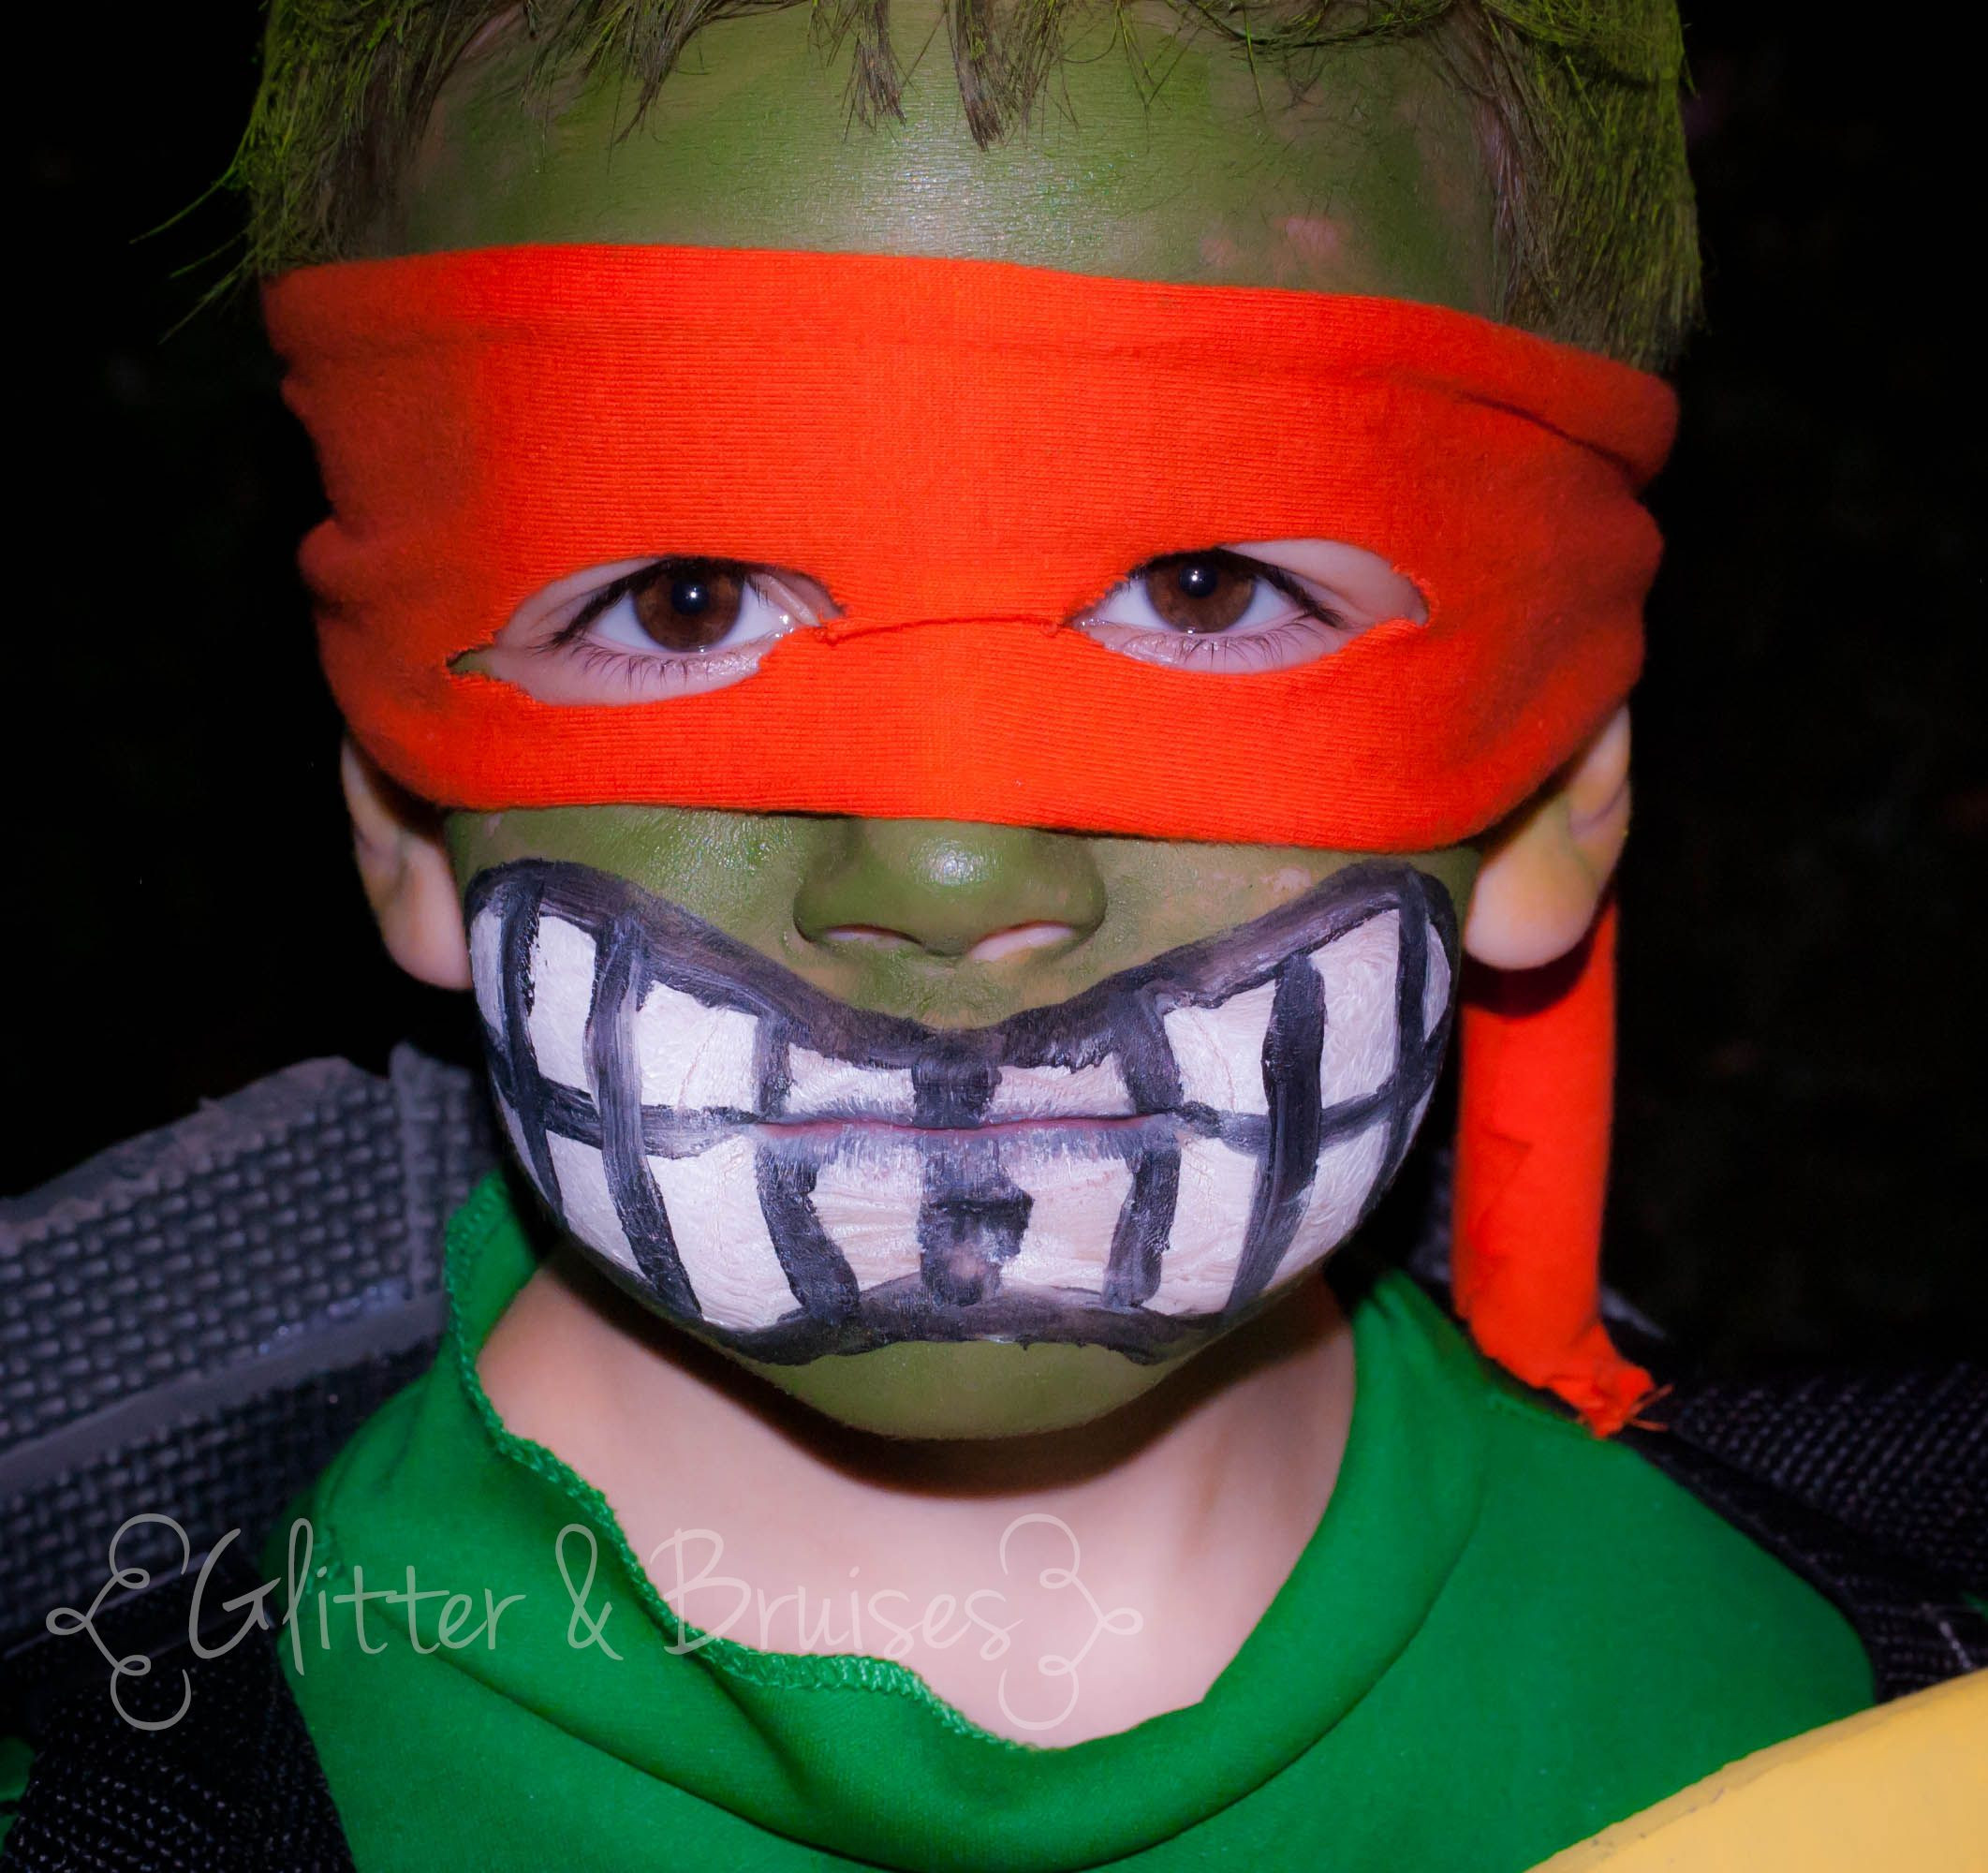 Best ideas about DIY Ninja Turtle Mask
. Save or Pin teenage mutant ninja turtles DIY eye mask Now.